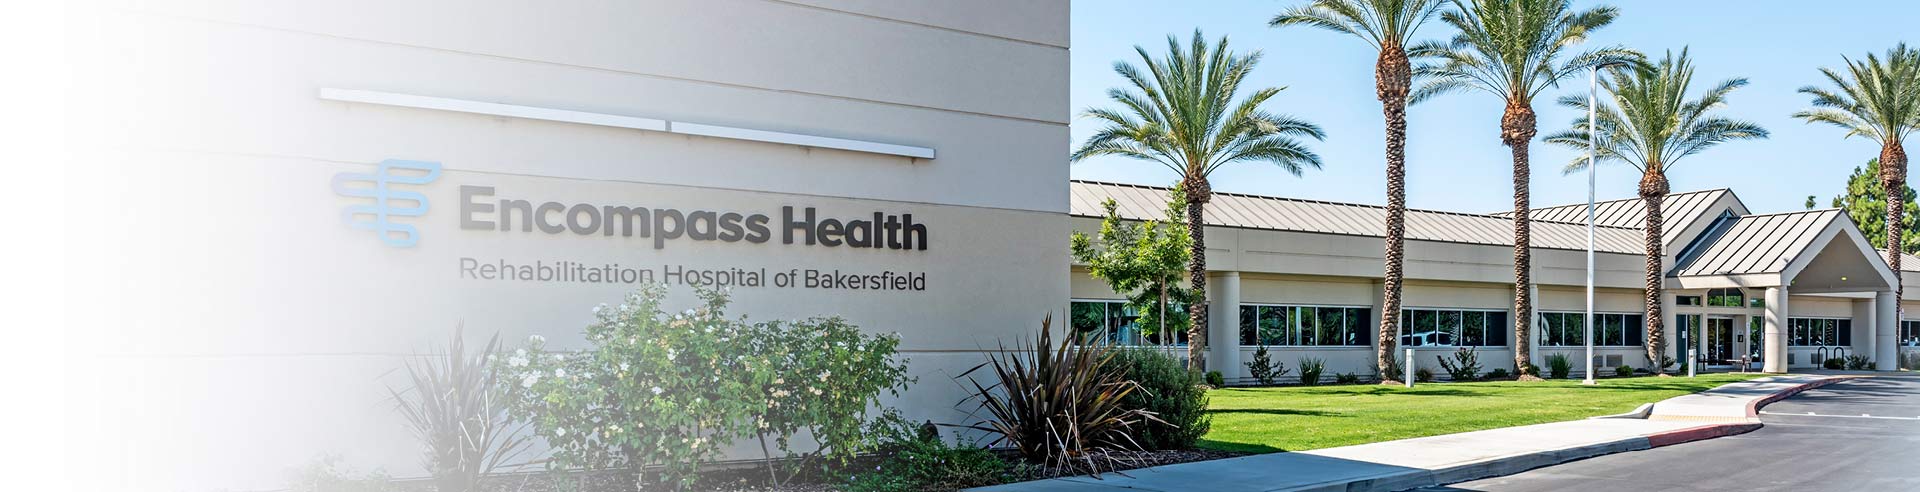 Encompass Health Rehabilitation Hospital of Bakersfield exterior image